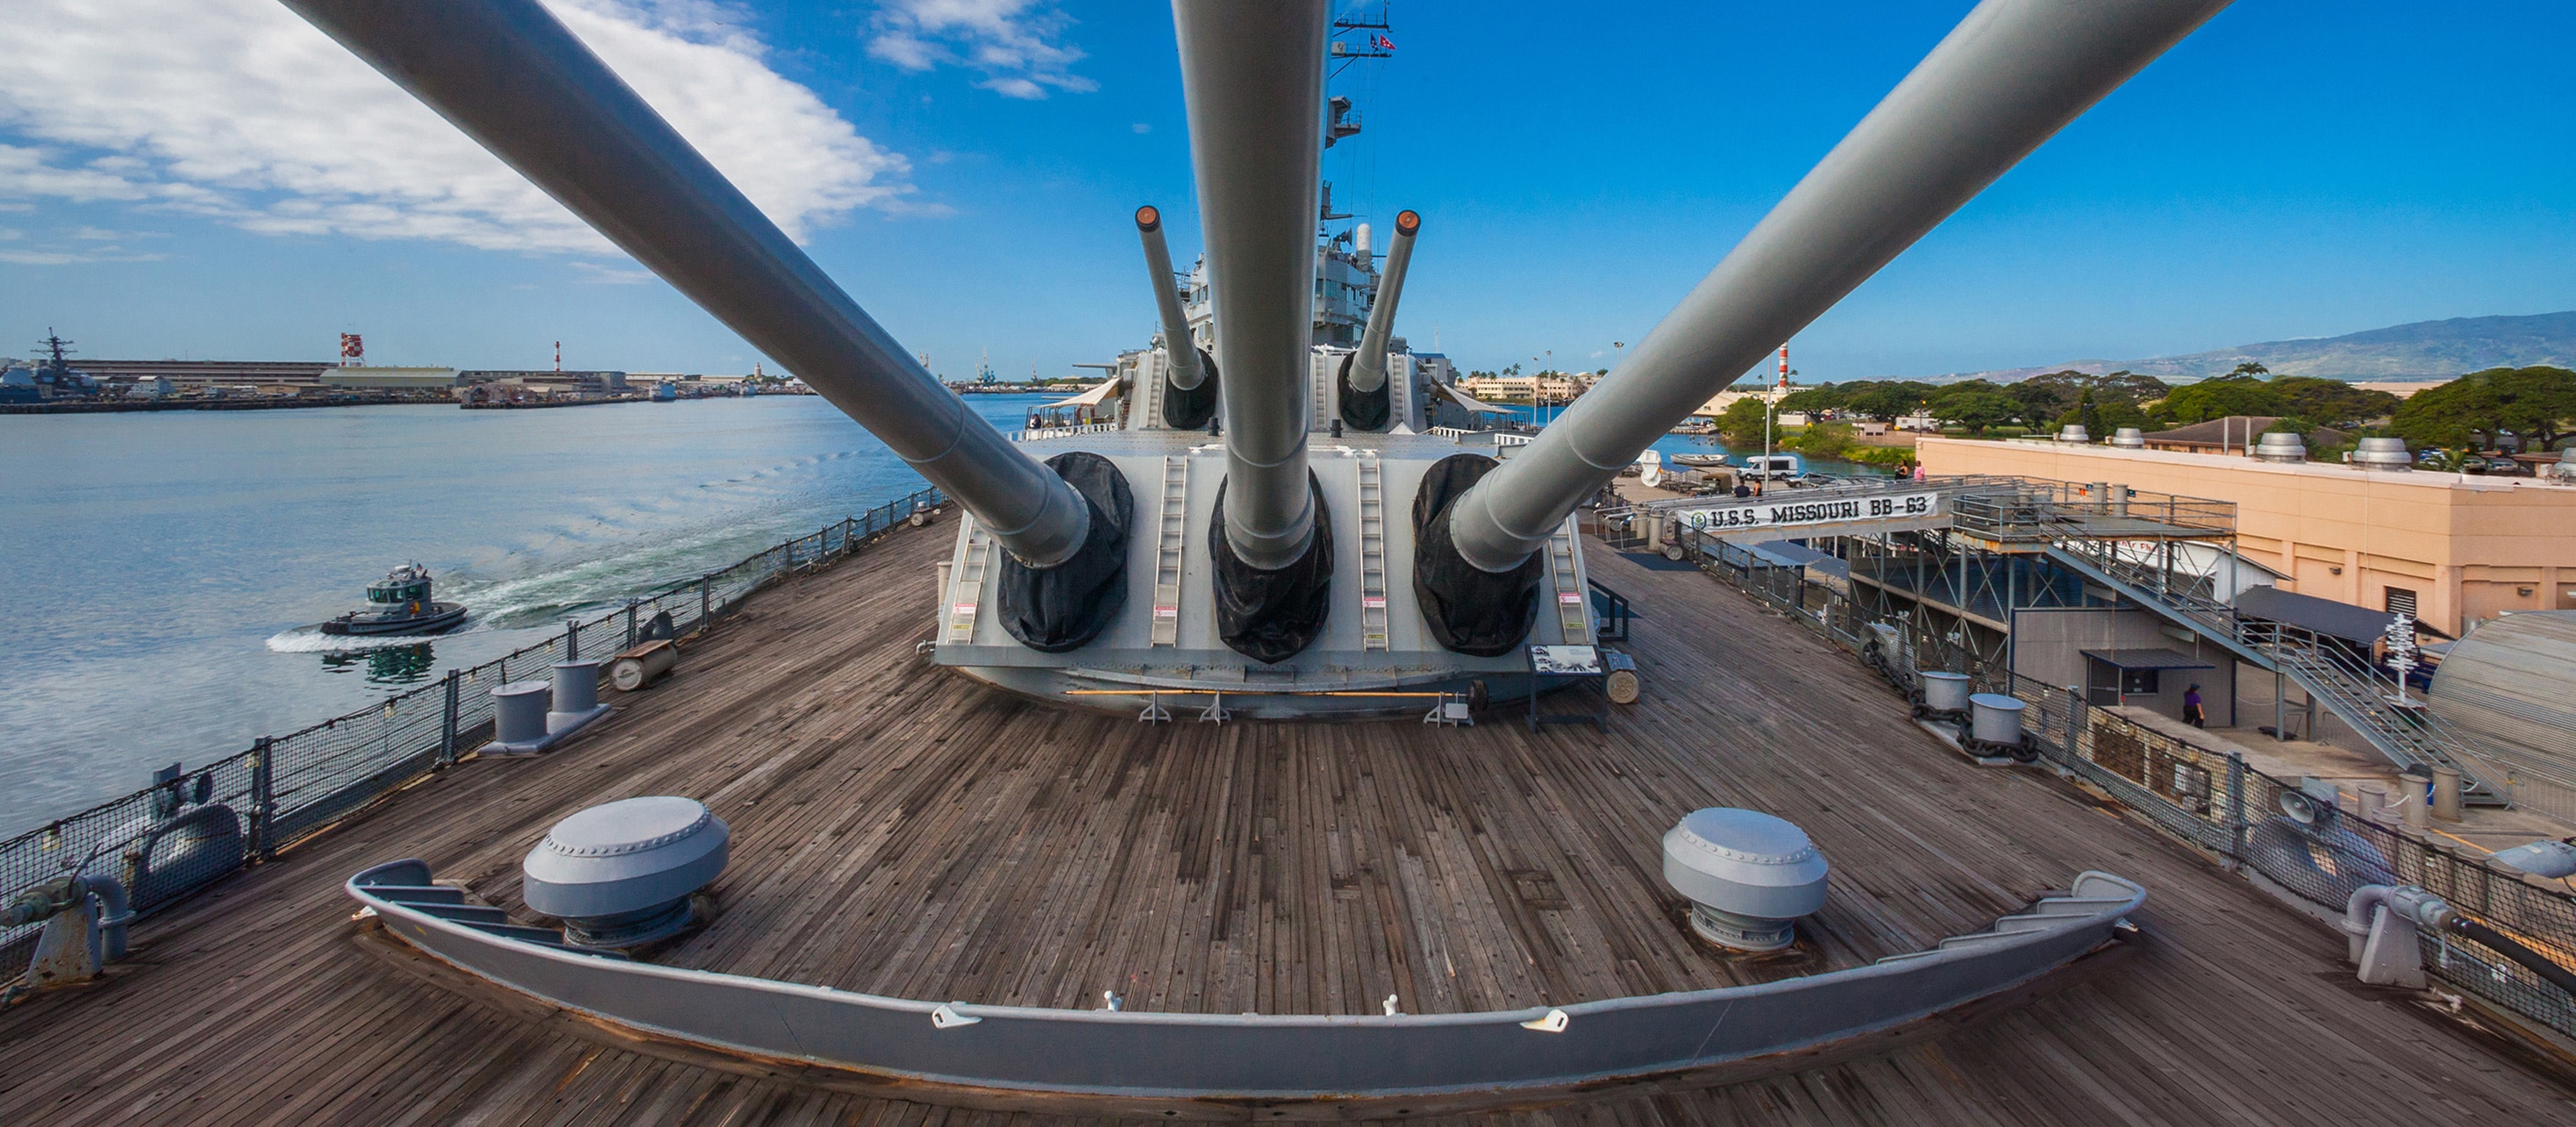 
Aboard the deck of the battleship U S S Missouri, the barrels of 5 high-caliber guns are aimed skyward